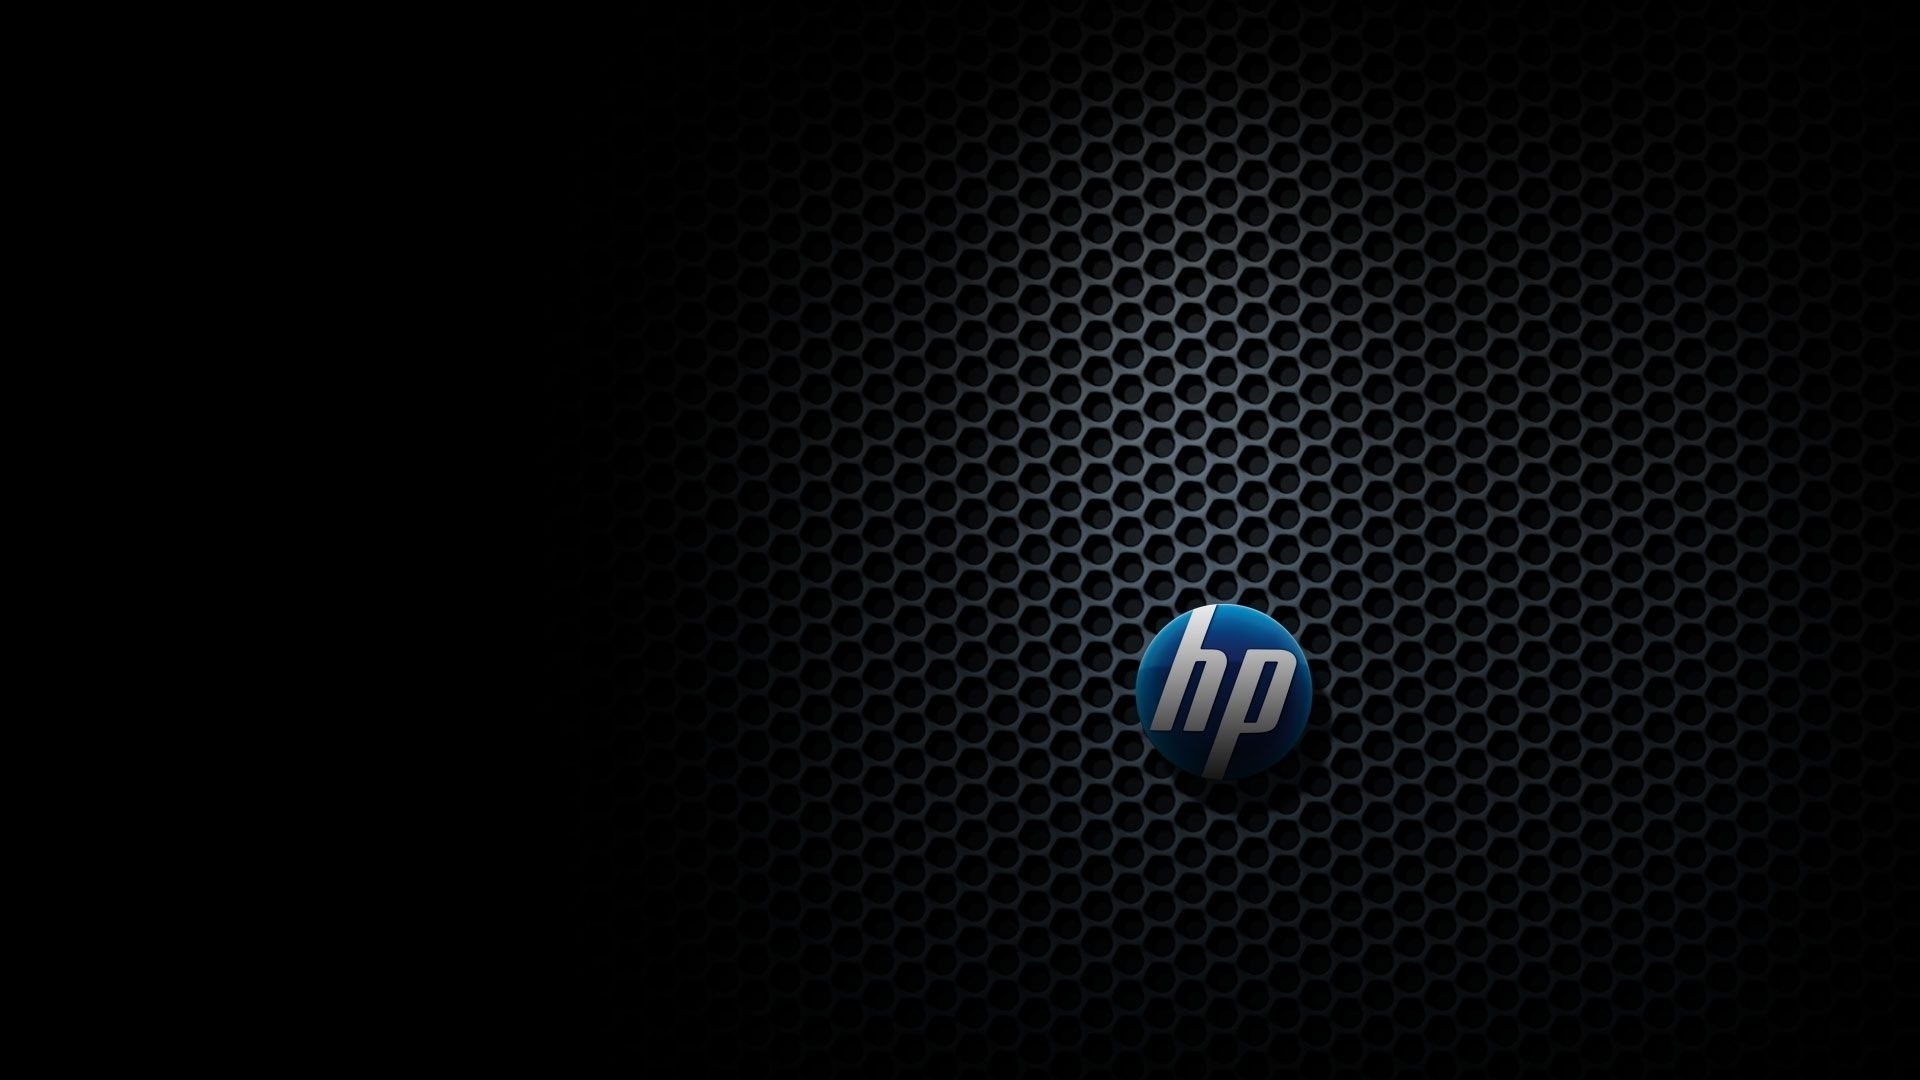 1920x1080 10 Top Hewlett Packard Wallpapers Hd FULL HD 1920Ã1080 For PC Background